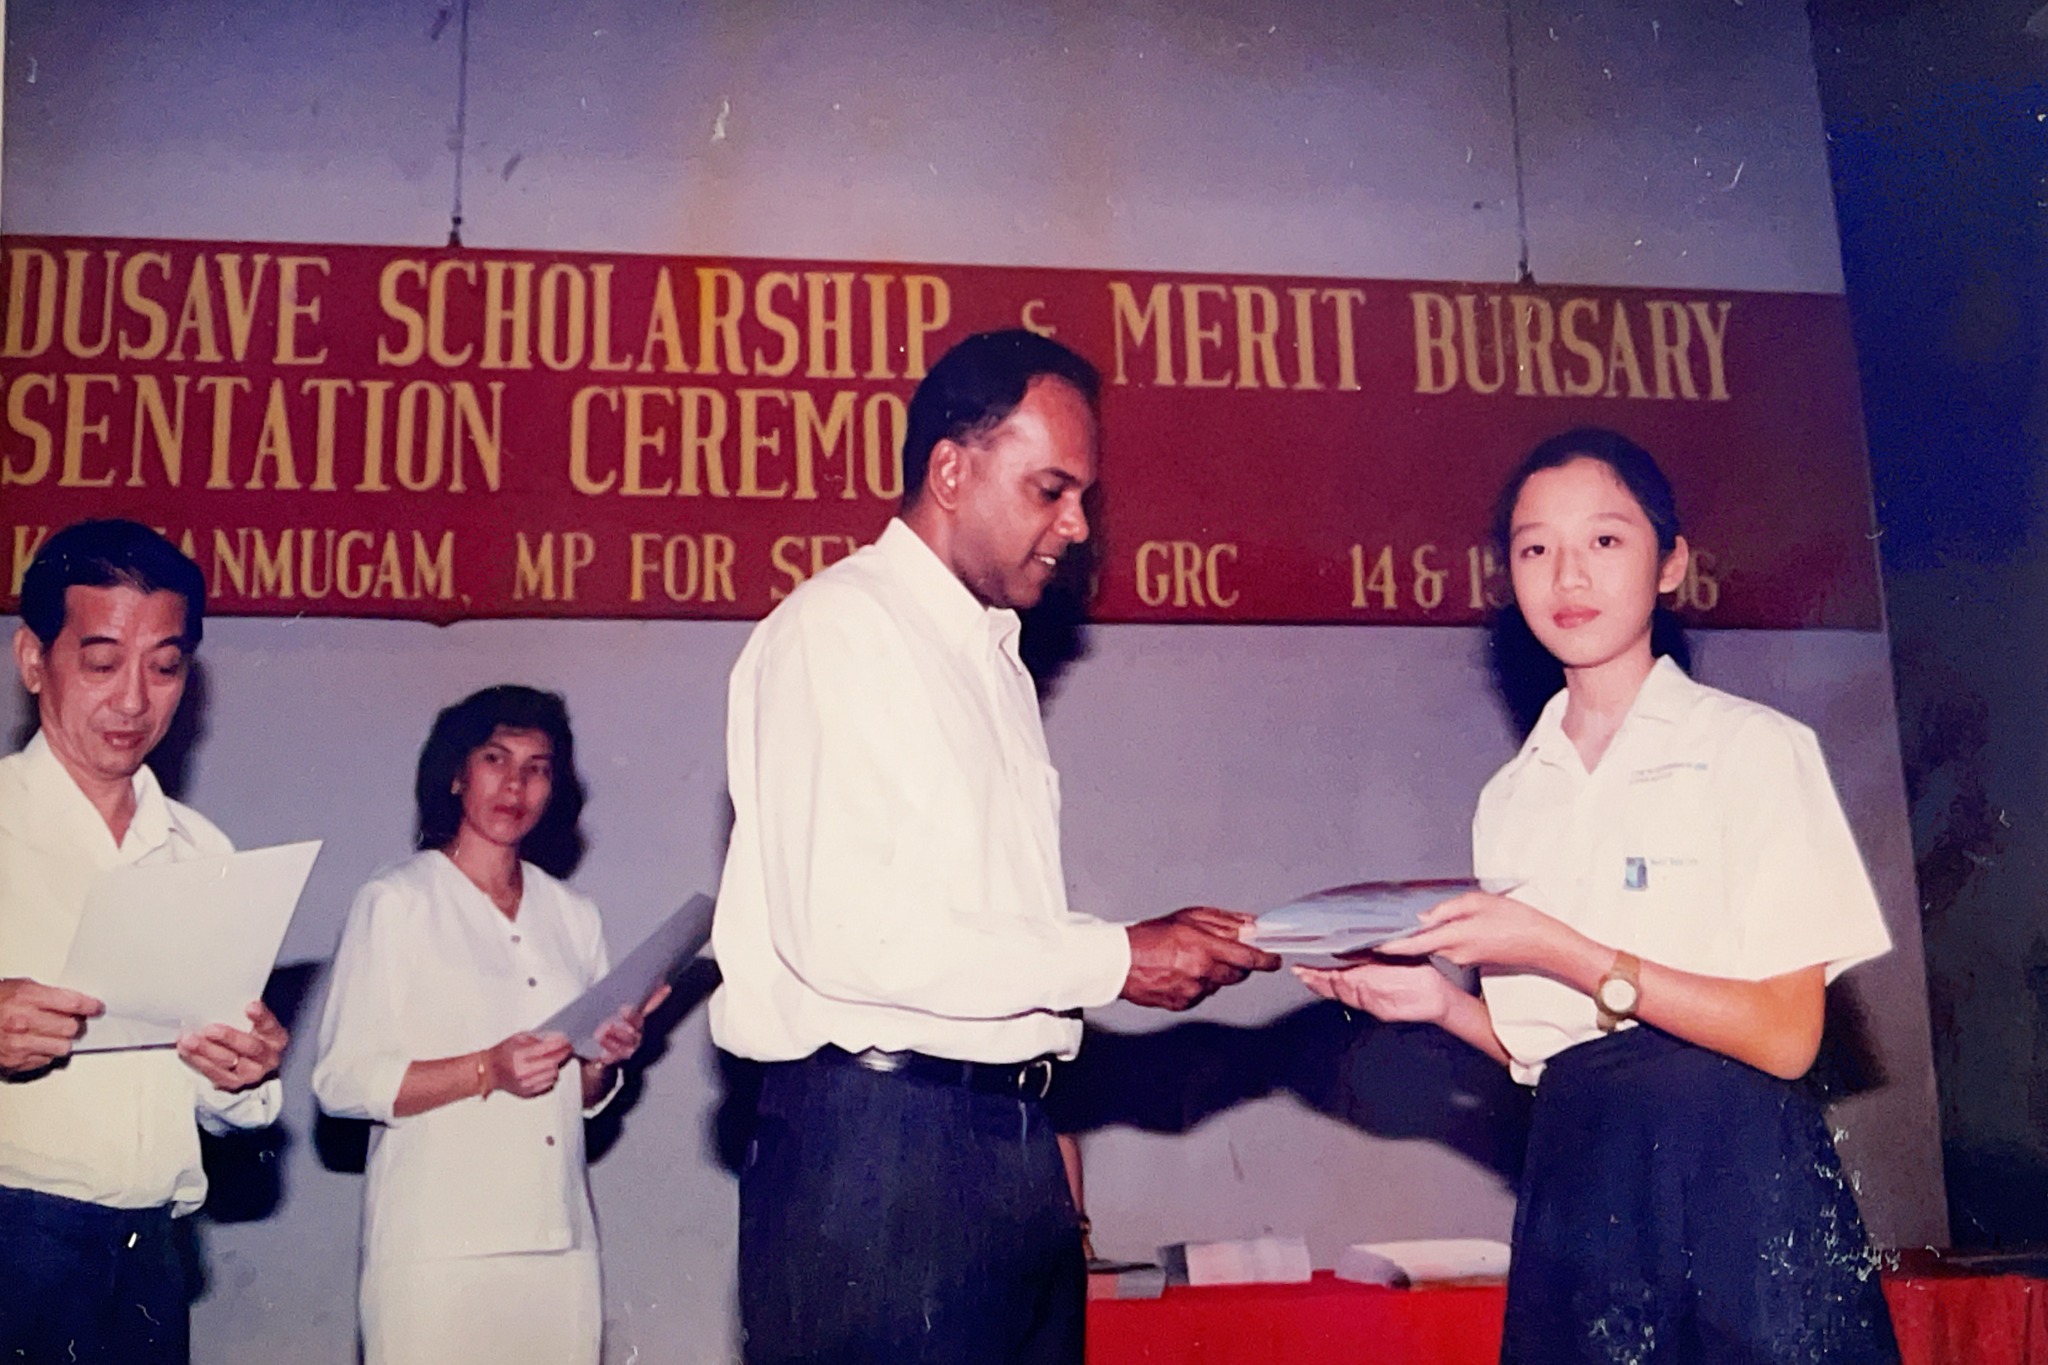 Shanmugam had presented an award to Yong's mother 27 years earlier